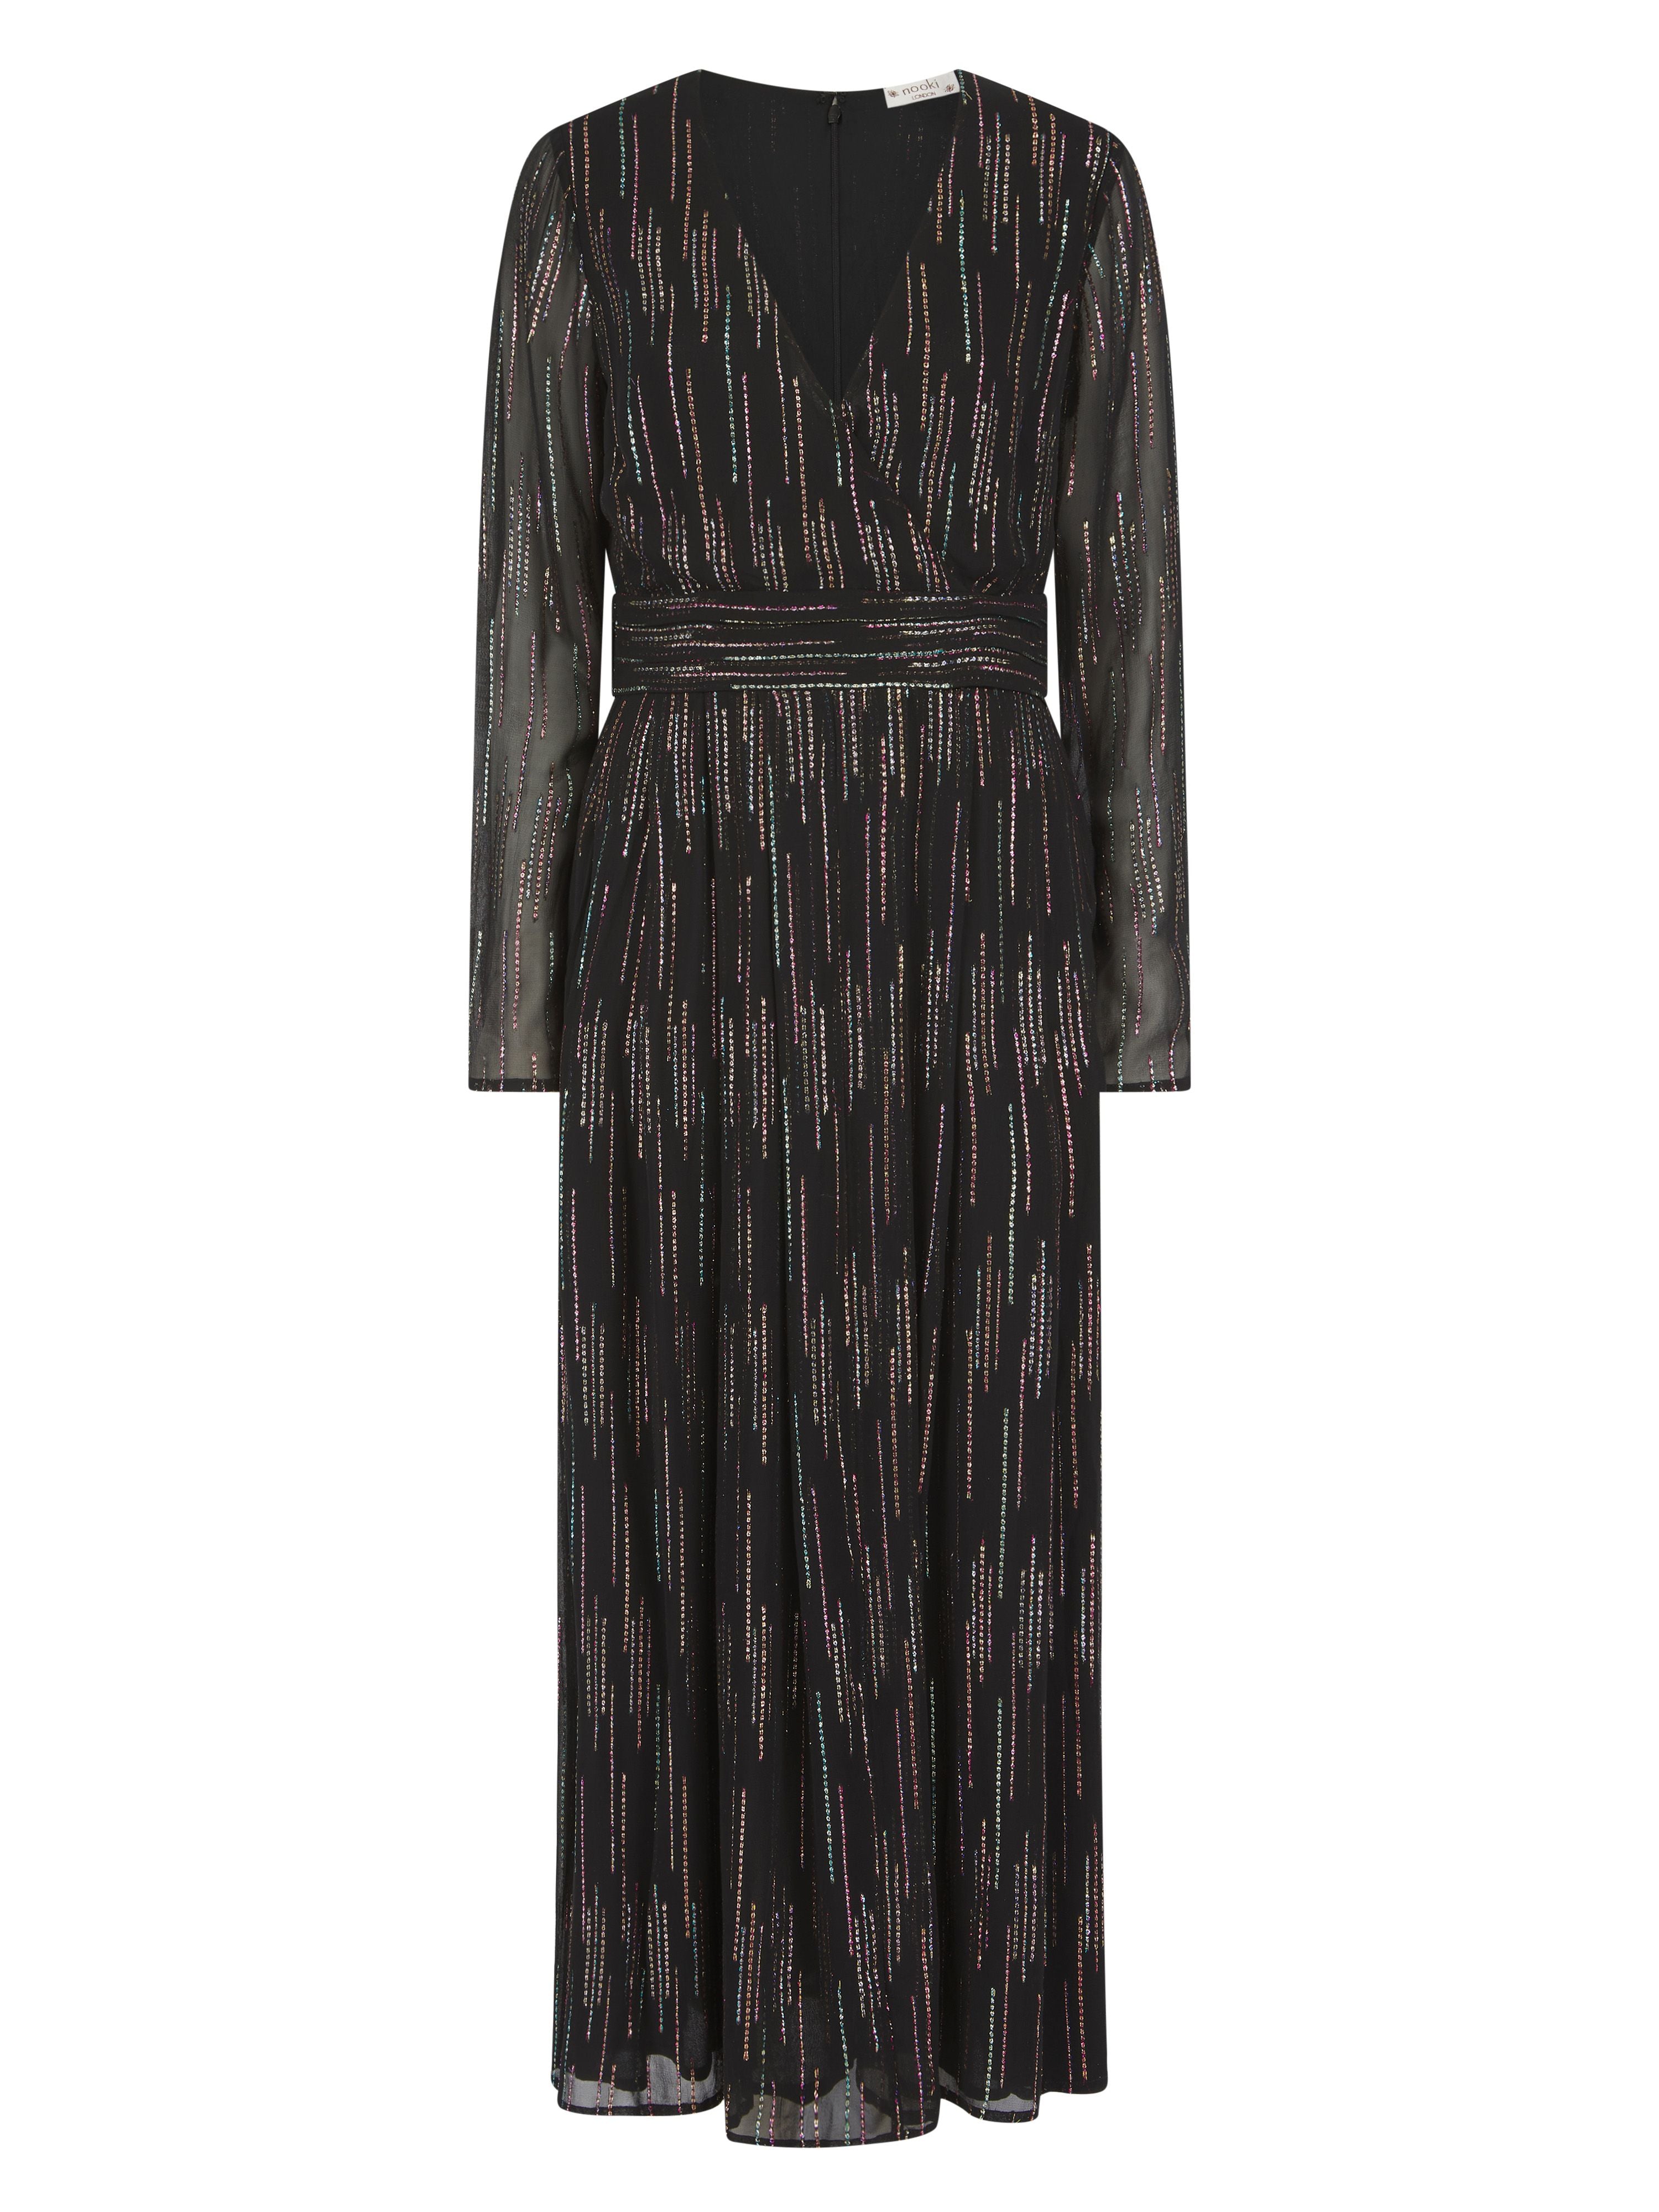 Women’s Mariah Metallic Jacquard Dress-Black Small Nooki Design